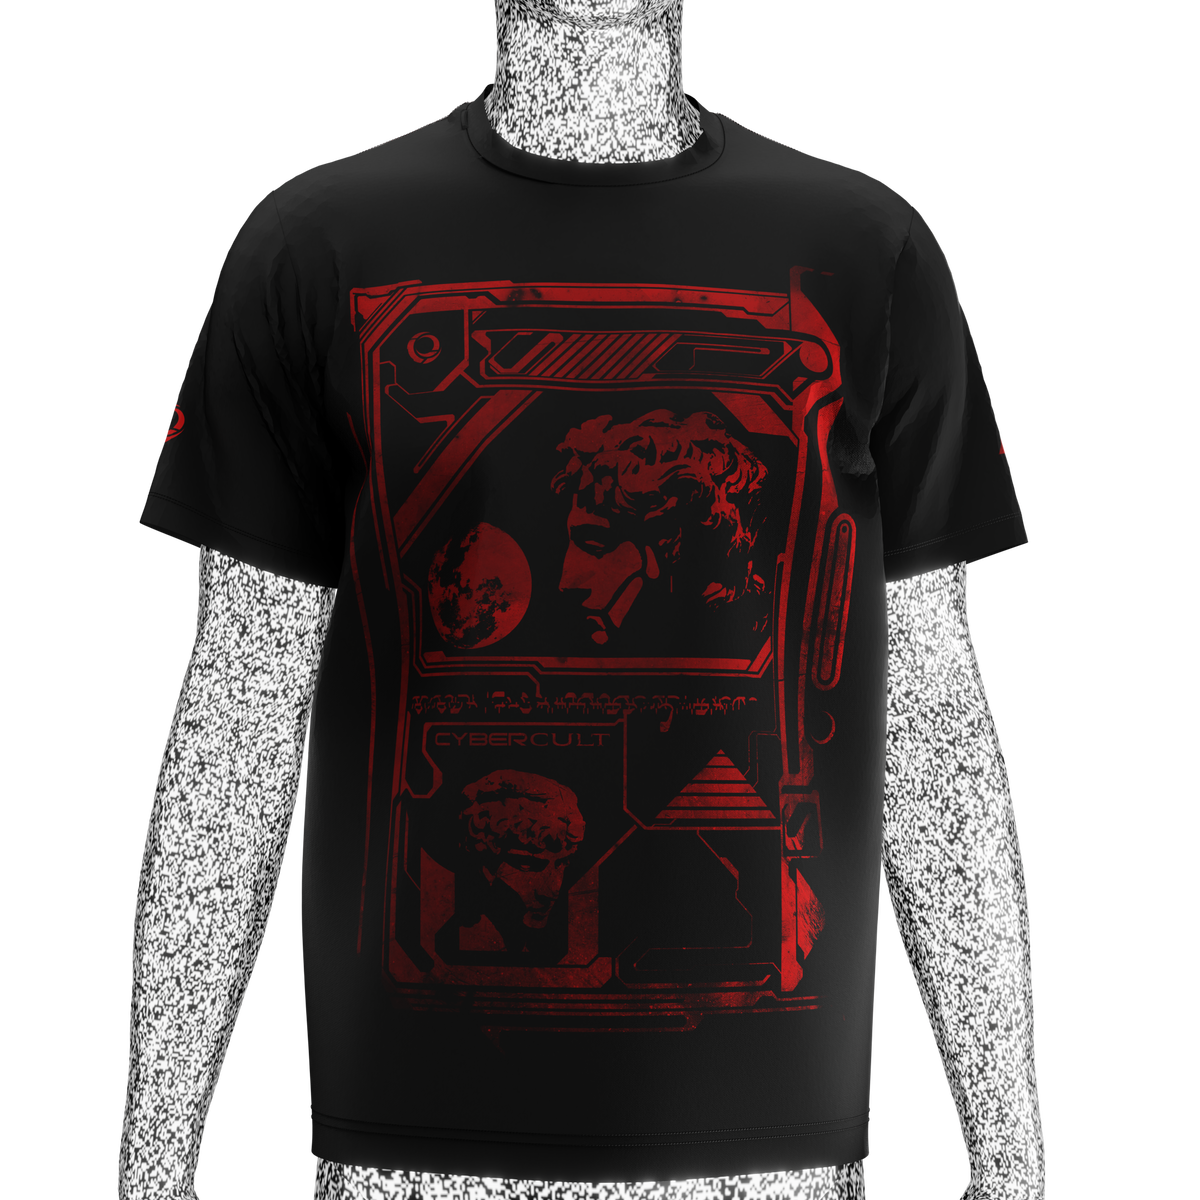 New Rusty the Cyberman, Small Chest Emblem T-Shirt black t shirts blank t  shirts quick drying shirt men workout shirt - AliExpress